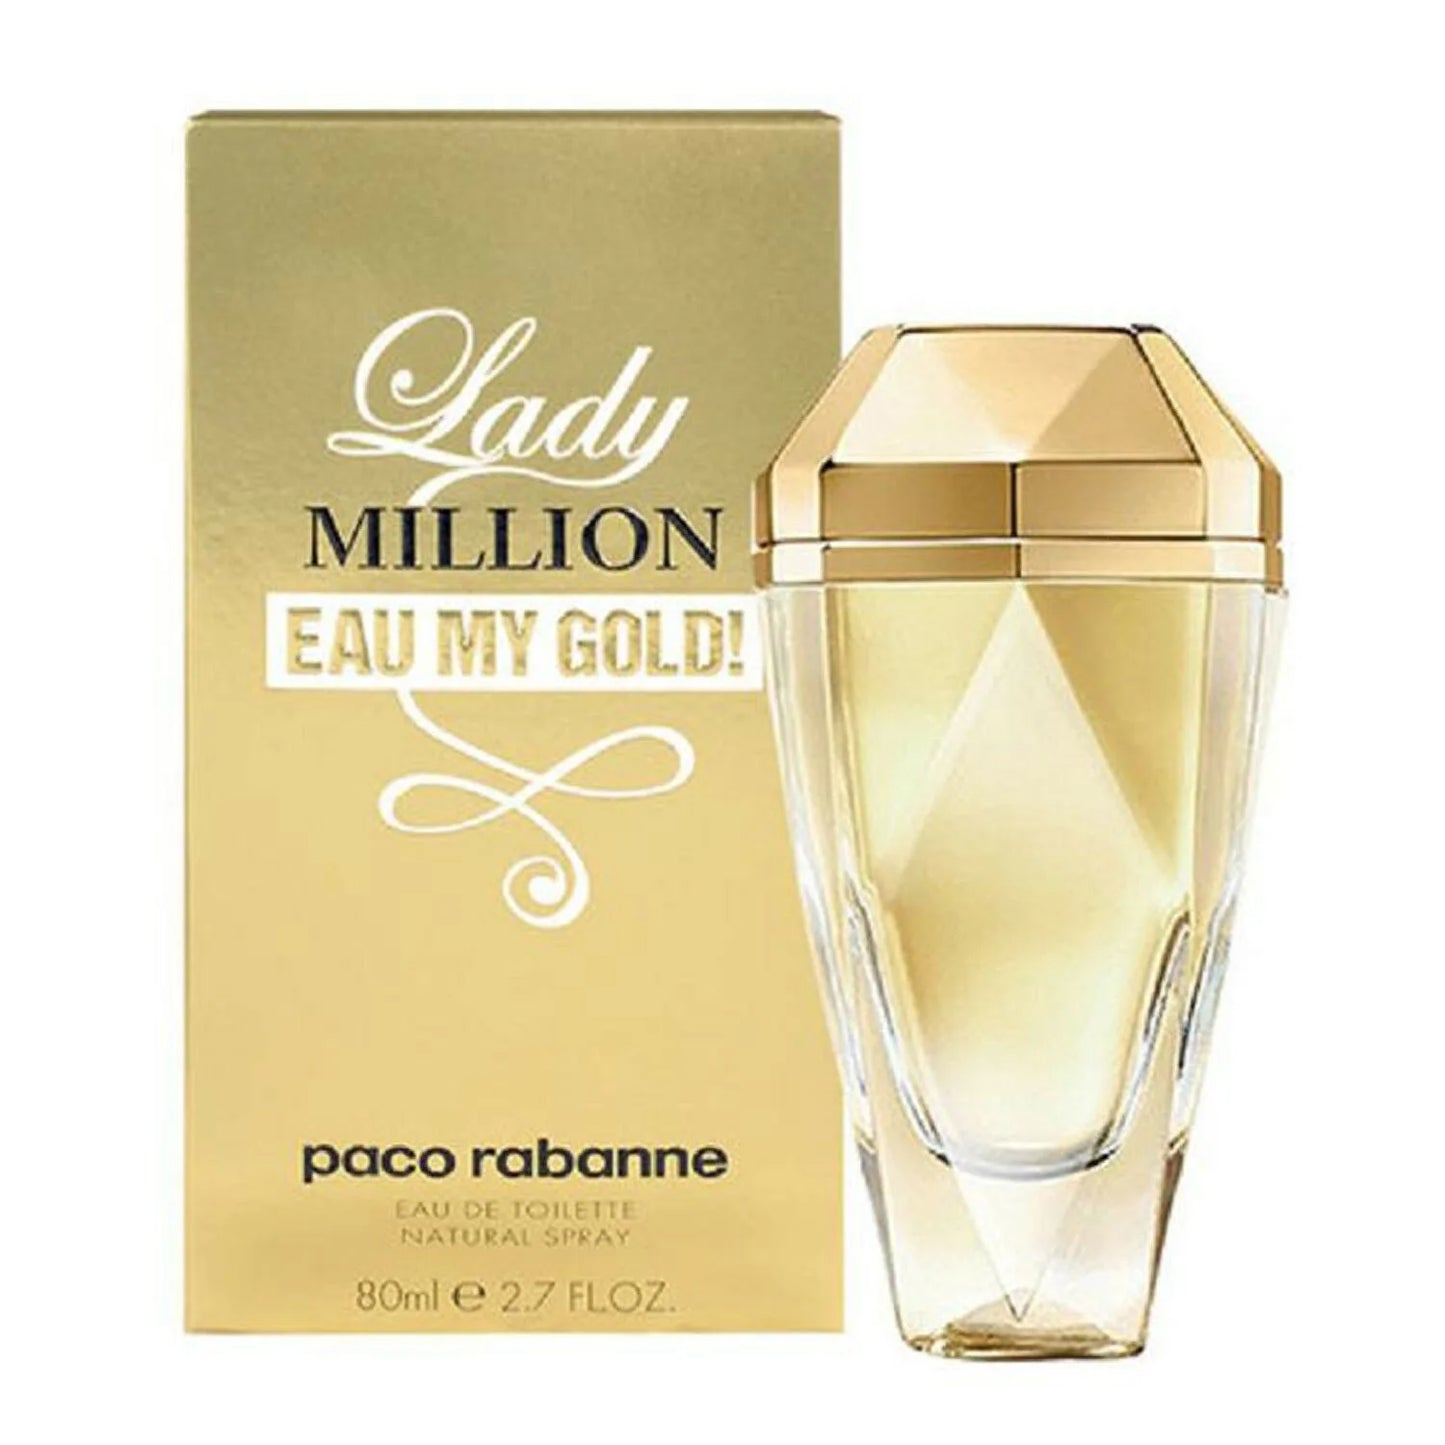 Lady Million Eau My Gold EDT - Perfume Planet 